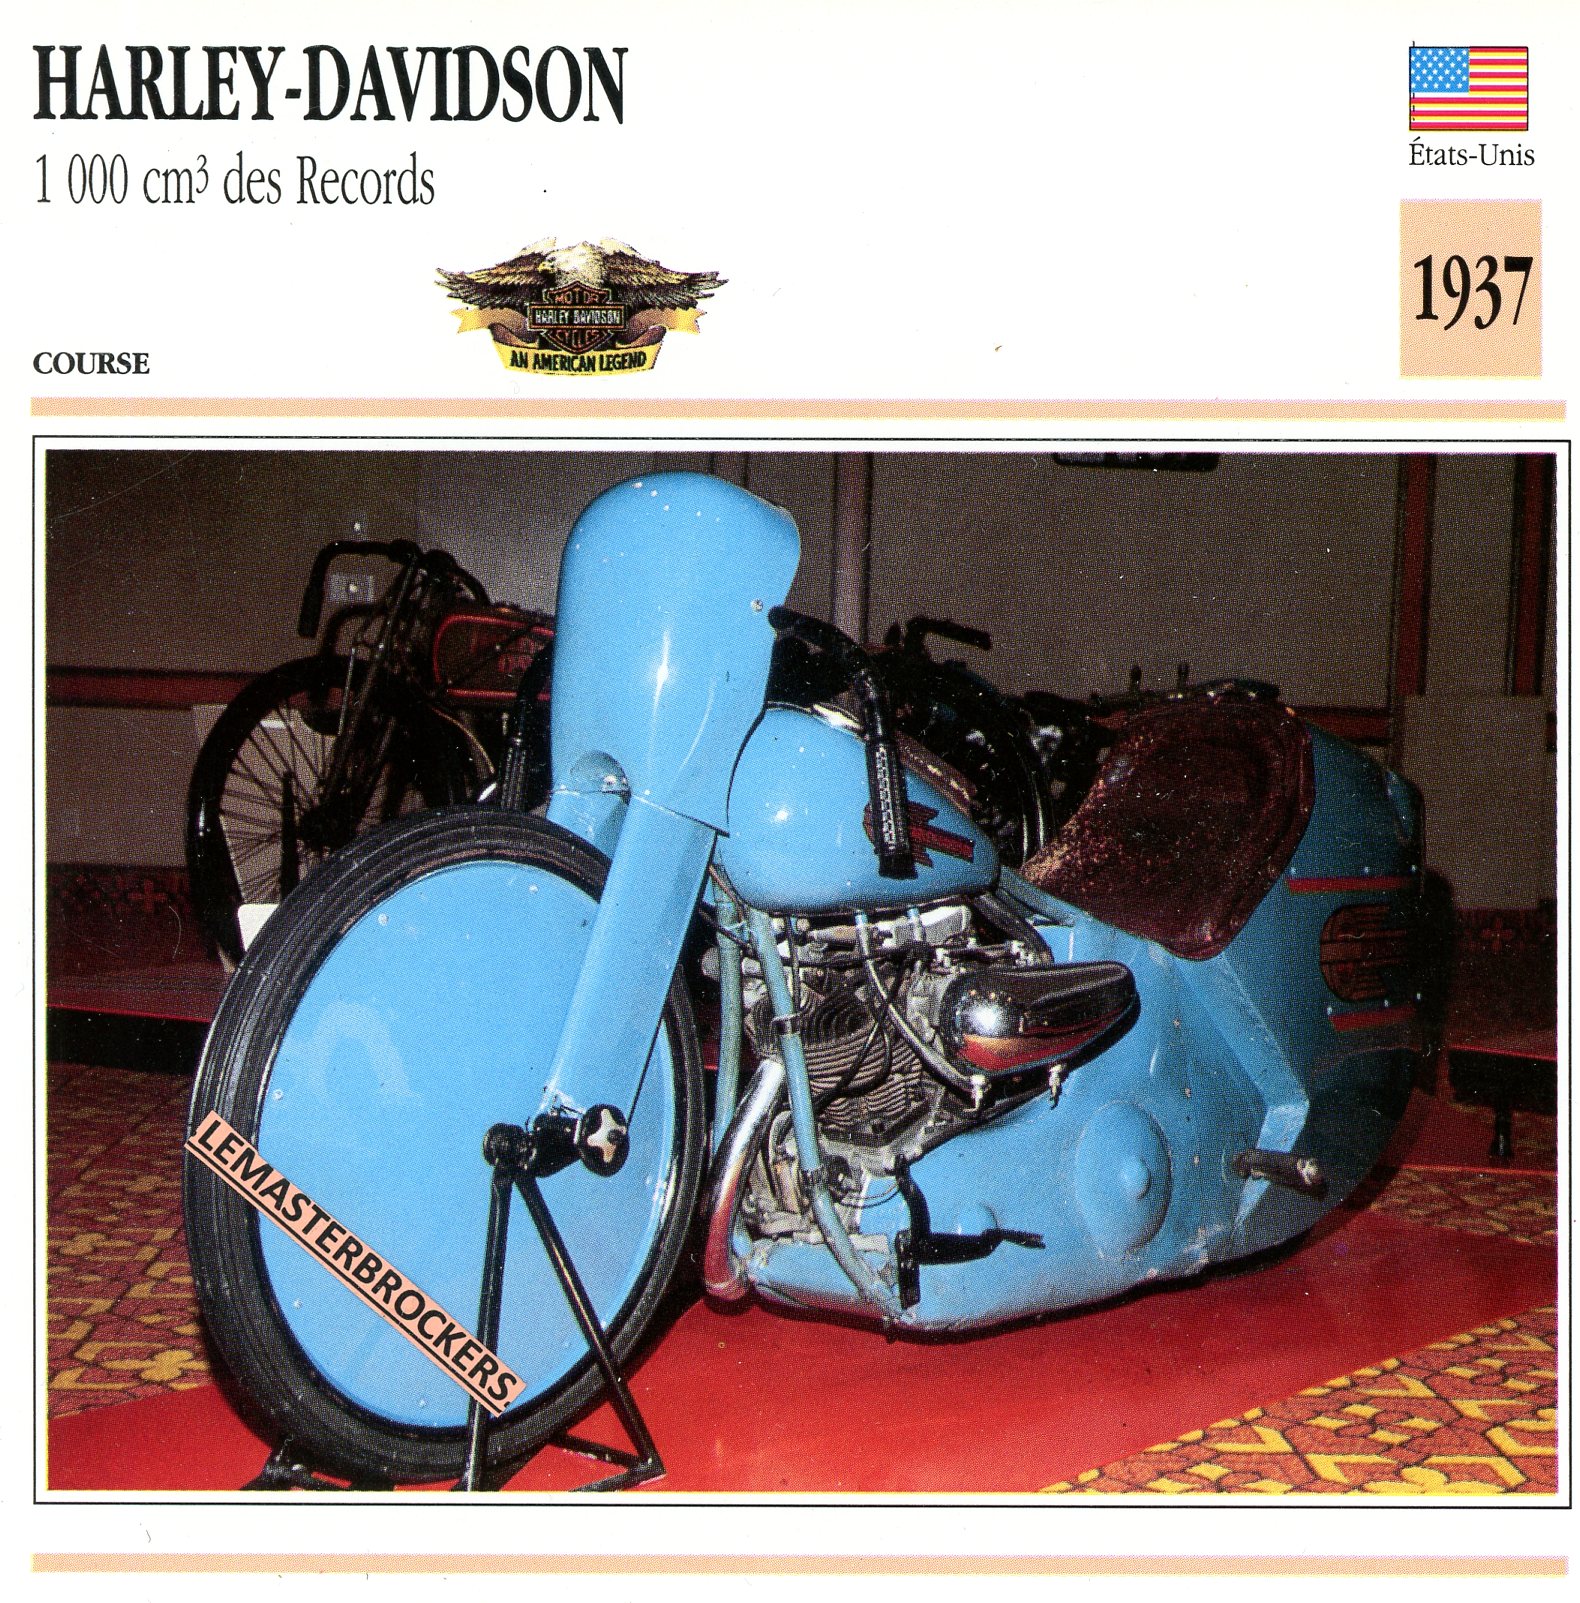 HARLEY-DAVIDSON-1000-DES-RECORD-1937-FICHE-MOTO-LEMASTERBROCKERS